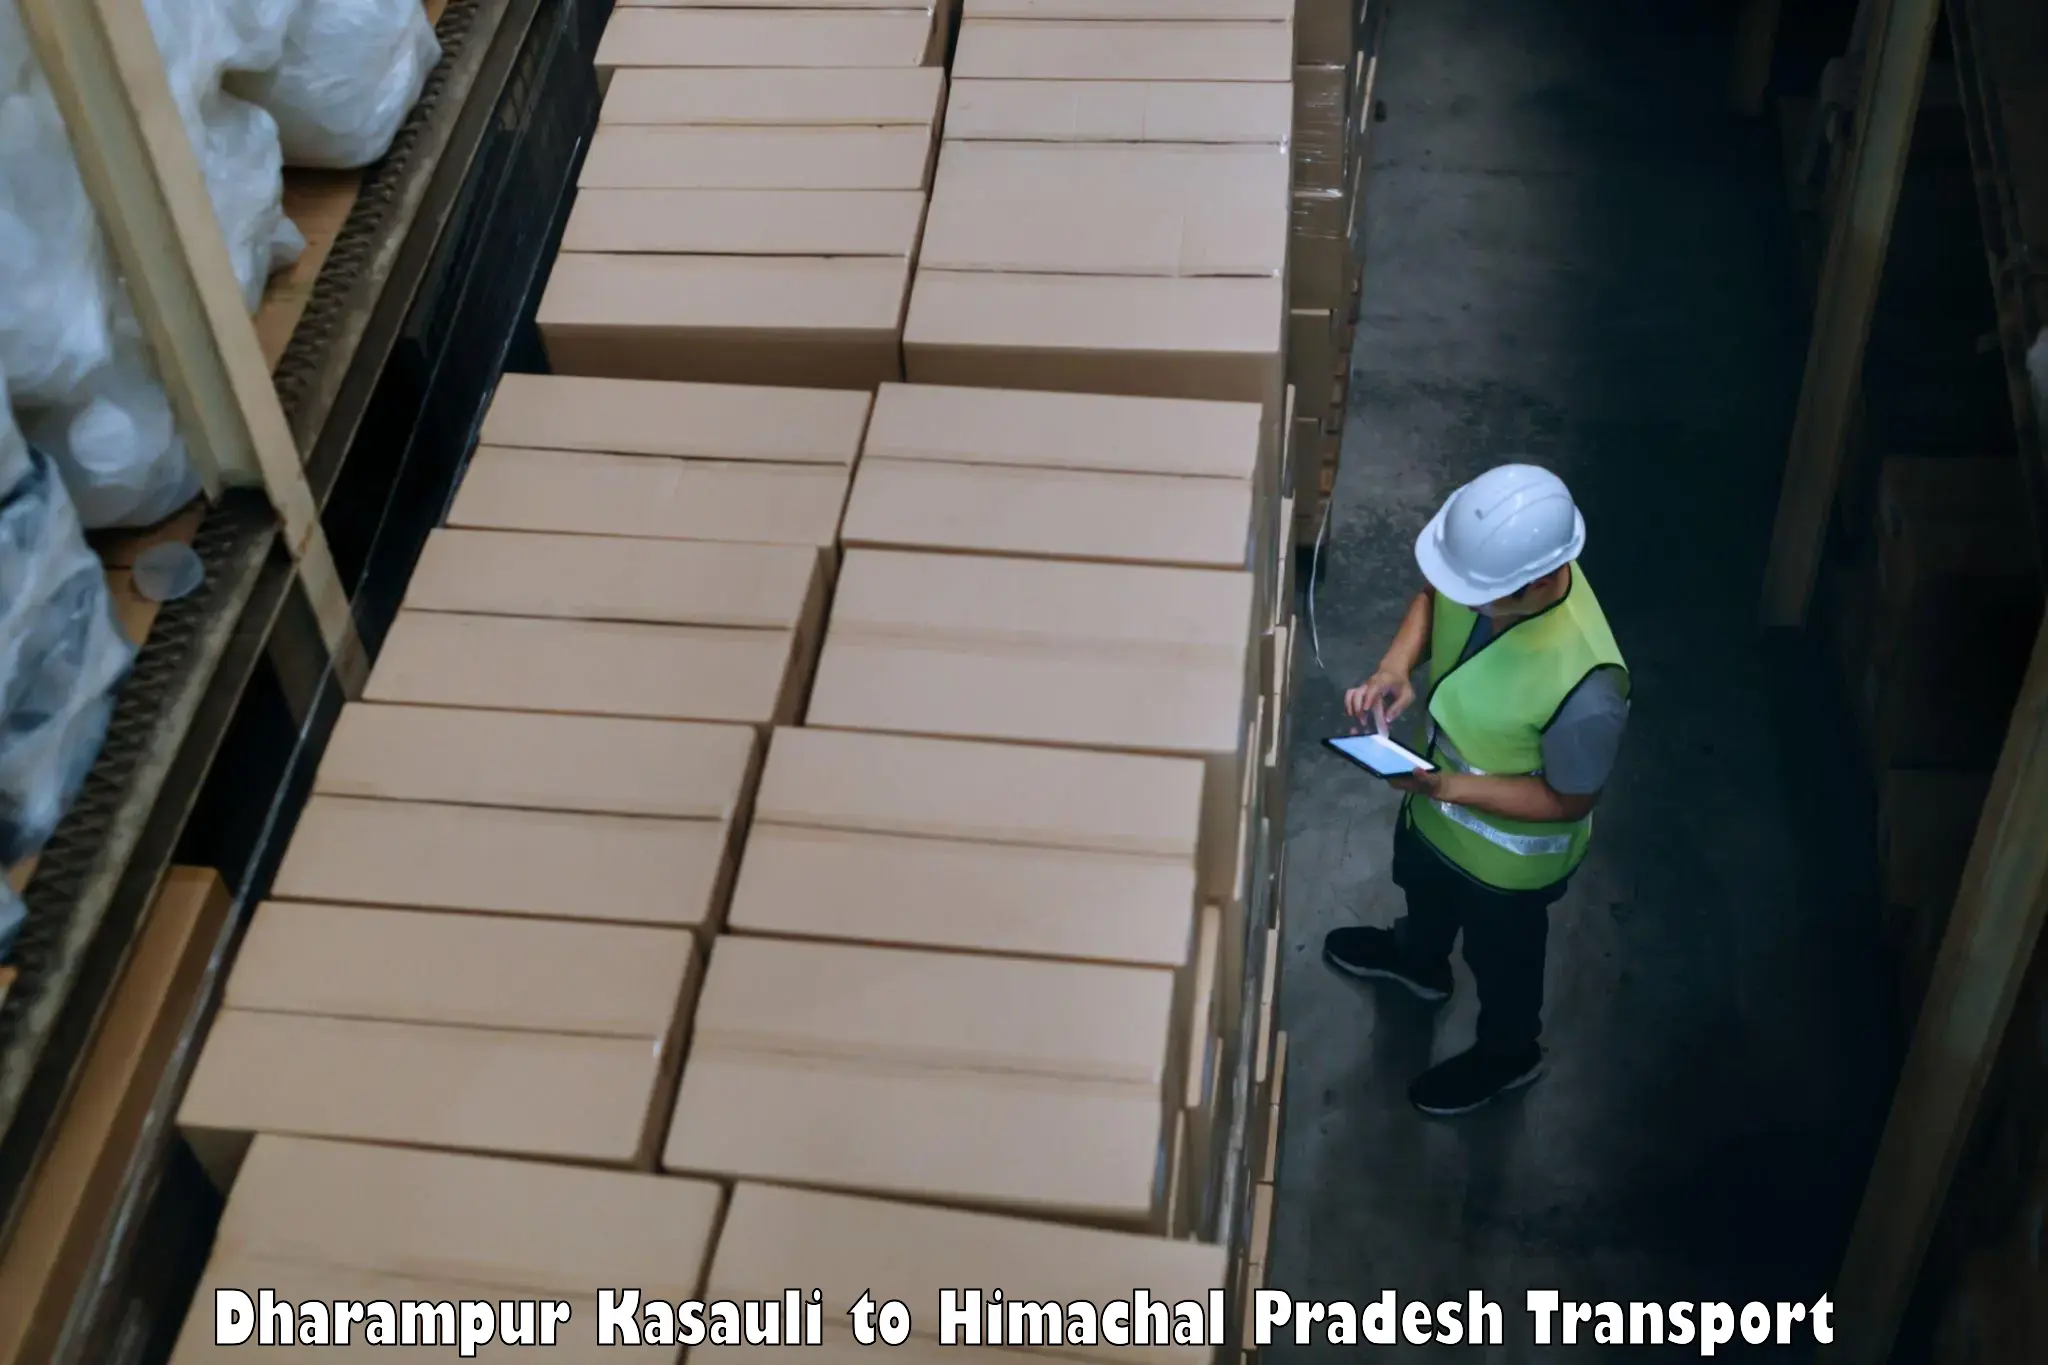 Transportation services in Dharampur Kasauli to Bilaspur Himachal Pradesh